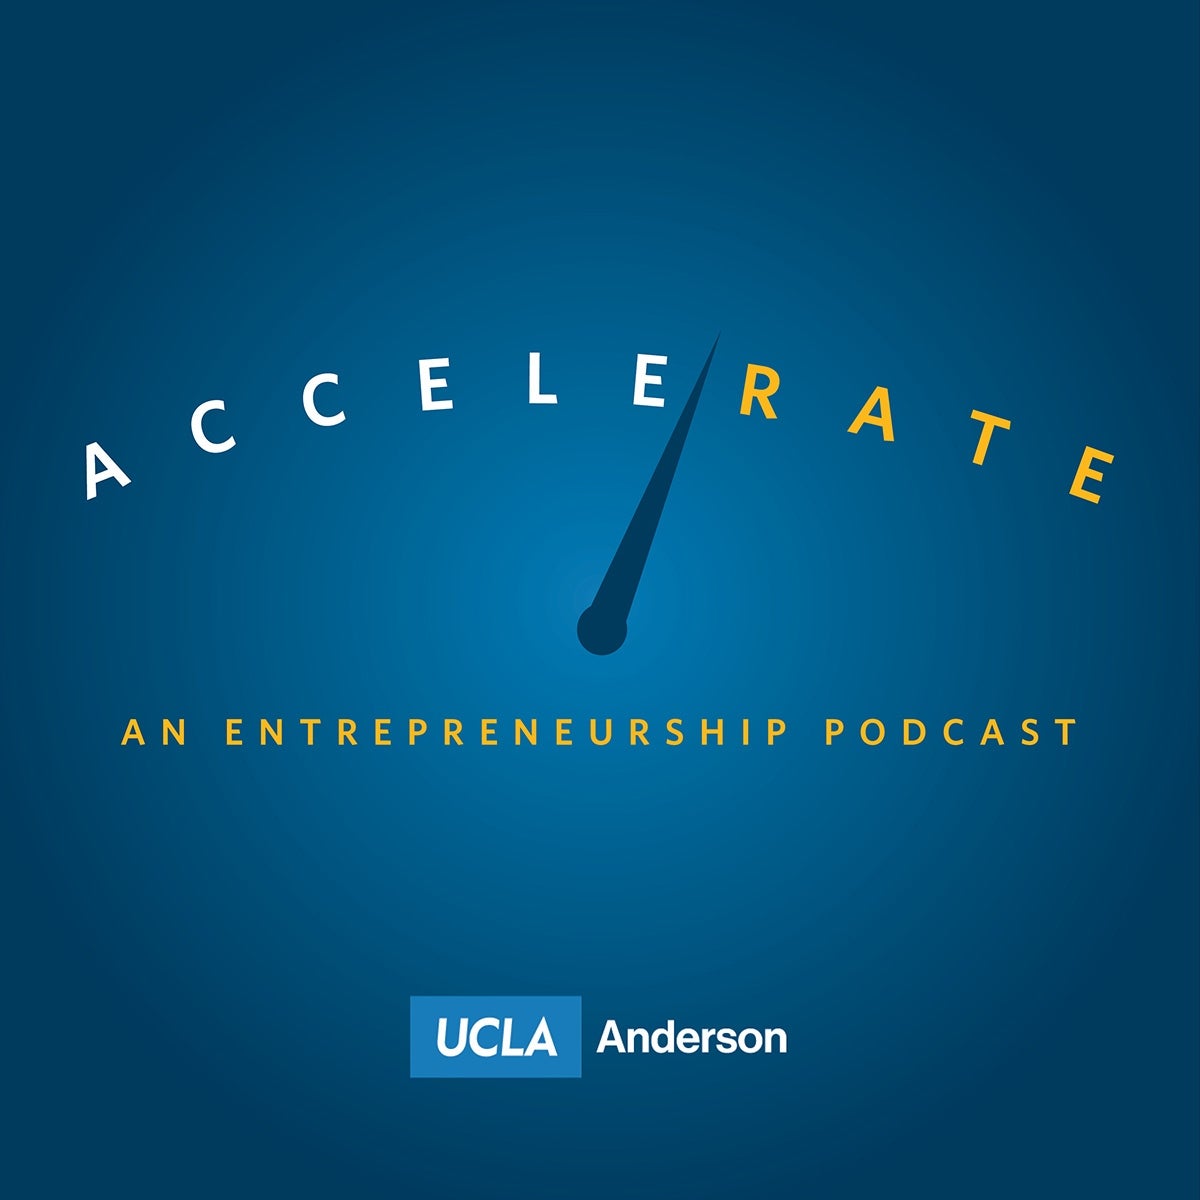 Accelerate - An entrepreneurship podcast